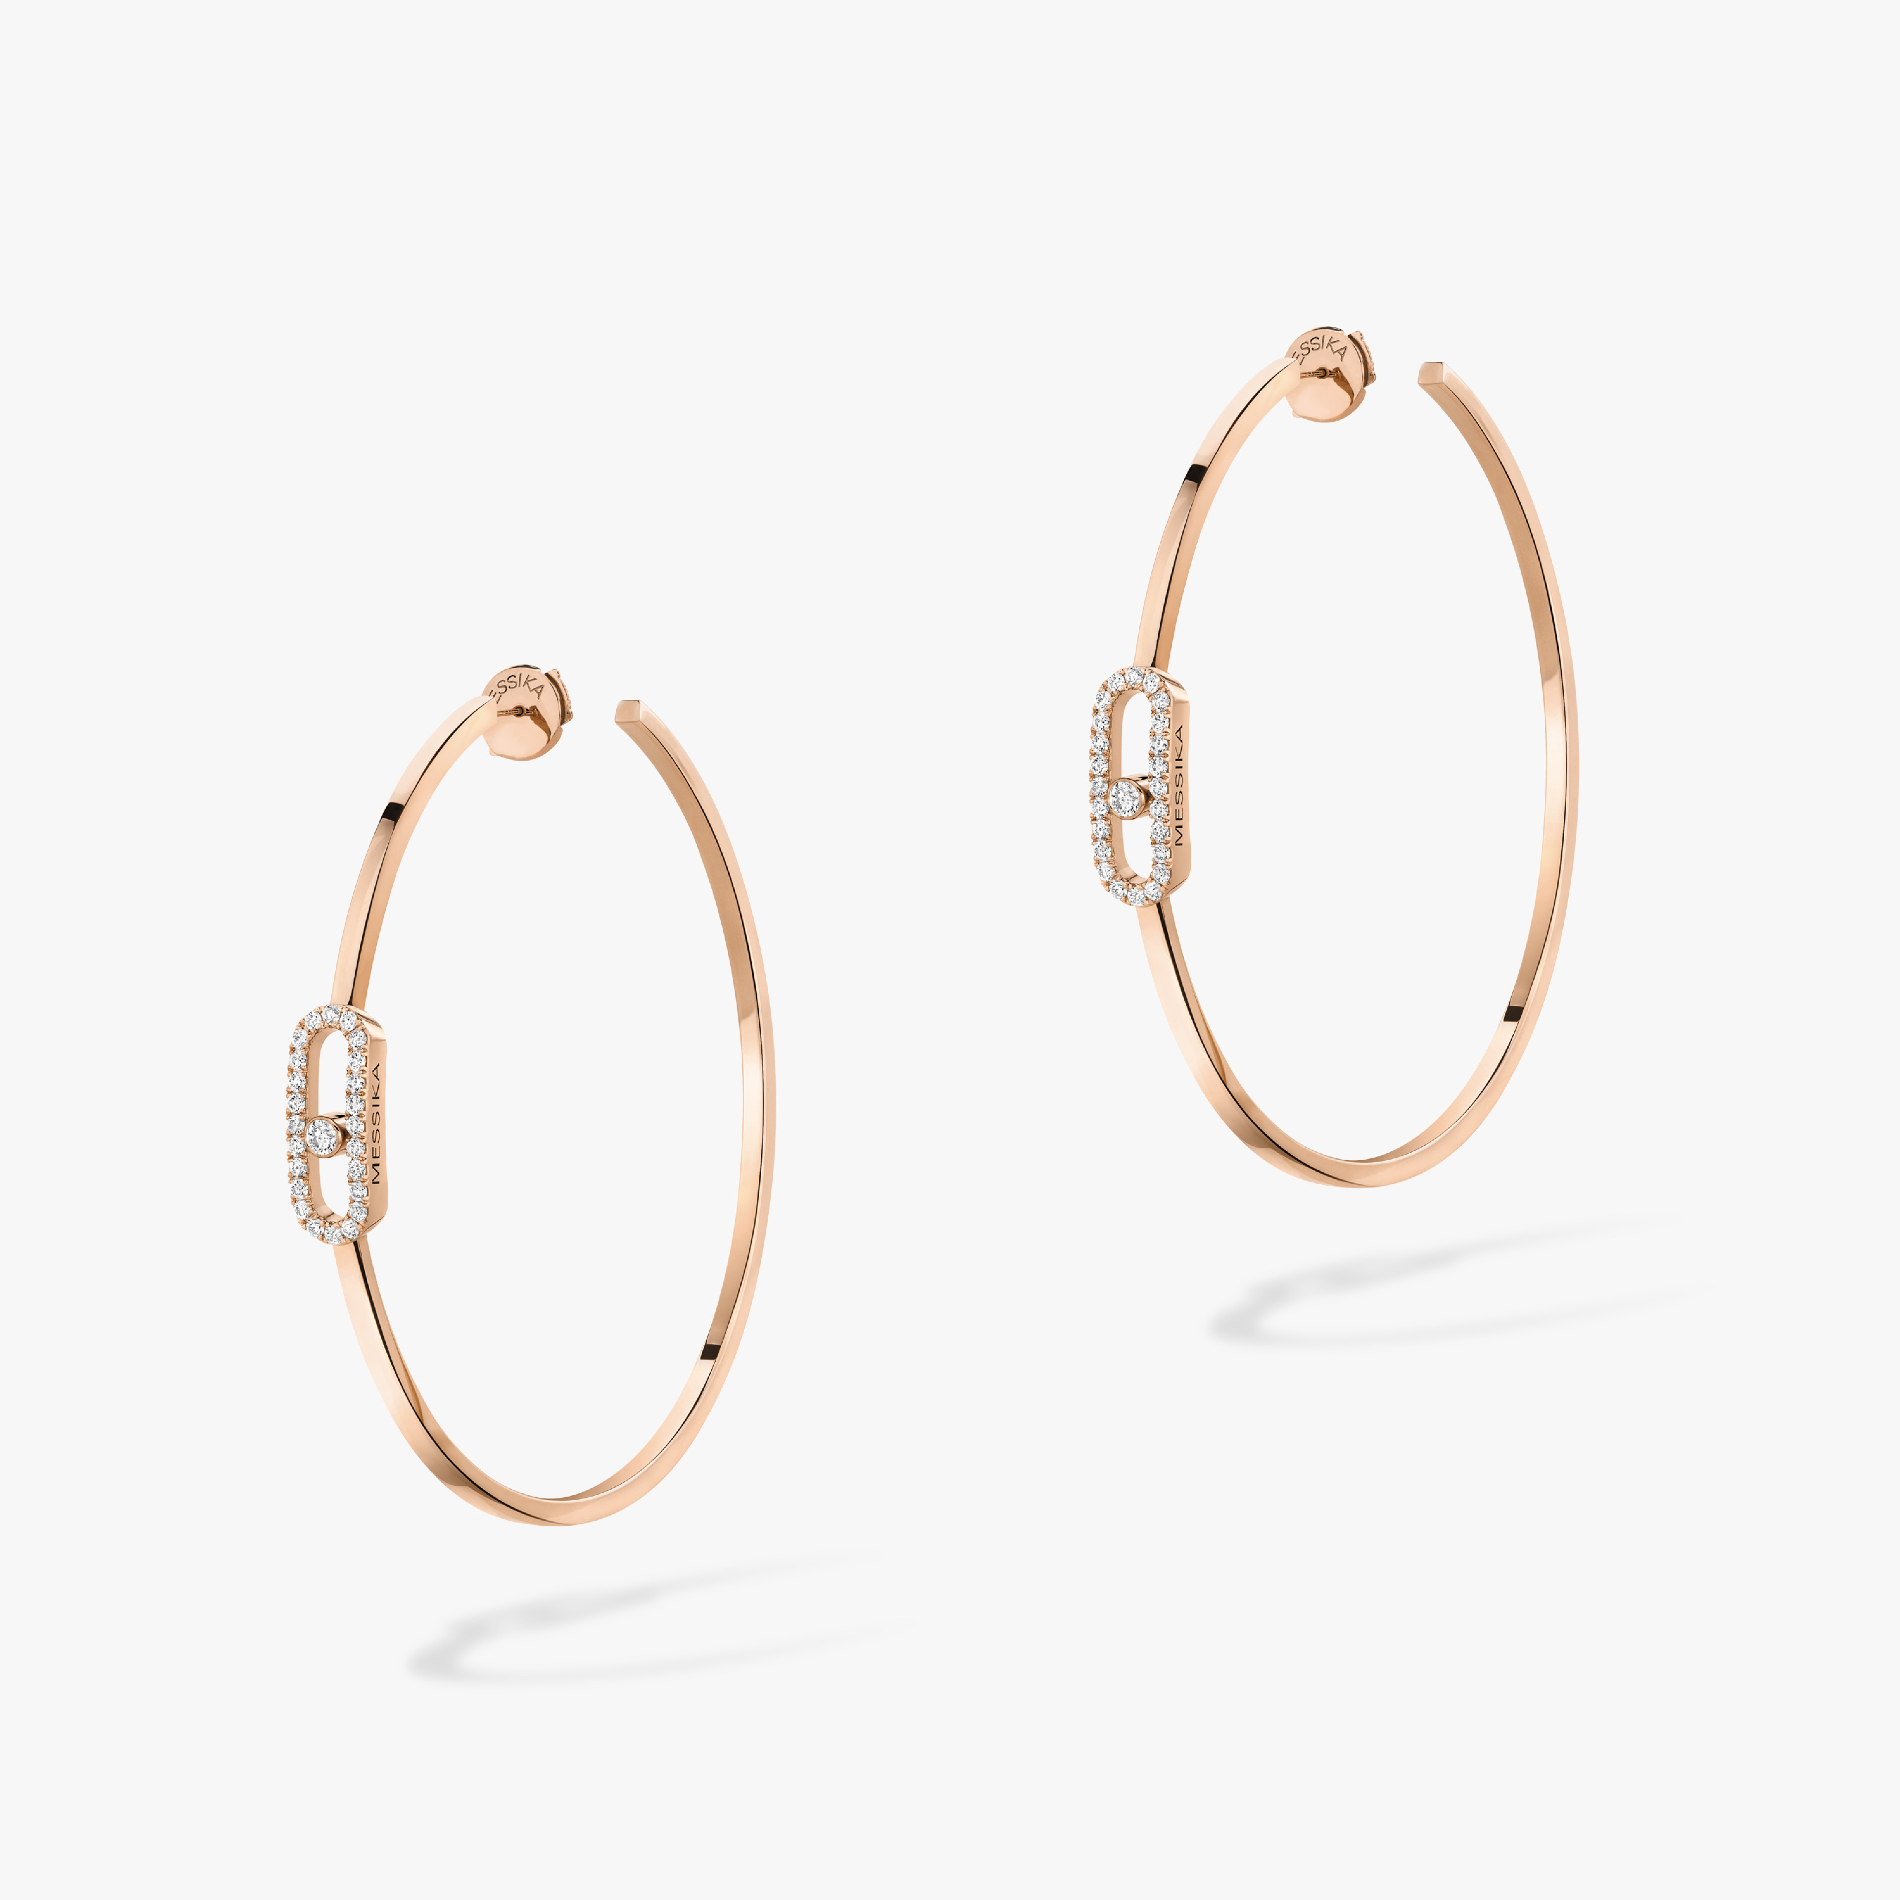 Move Uno Large Hoop Earrings Pink Gold For Her Diamond Earrings 12468-PG